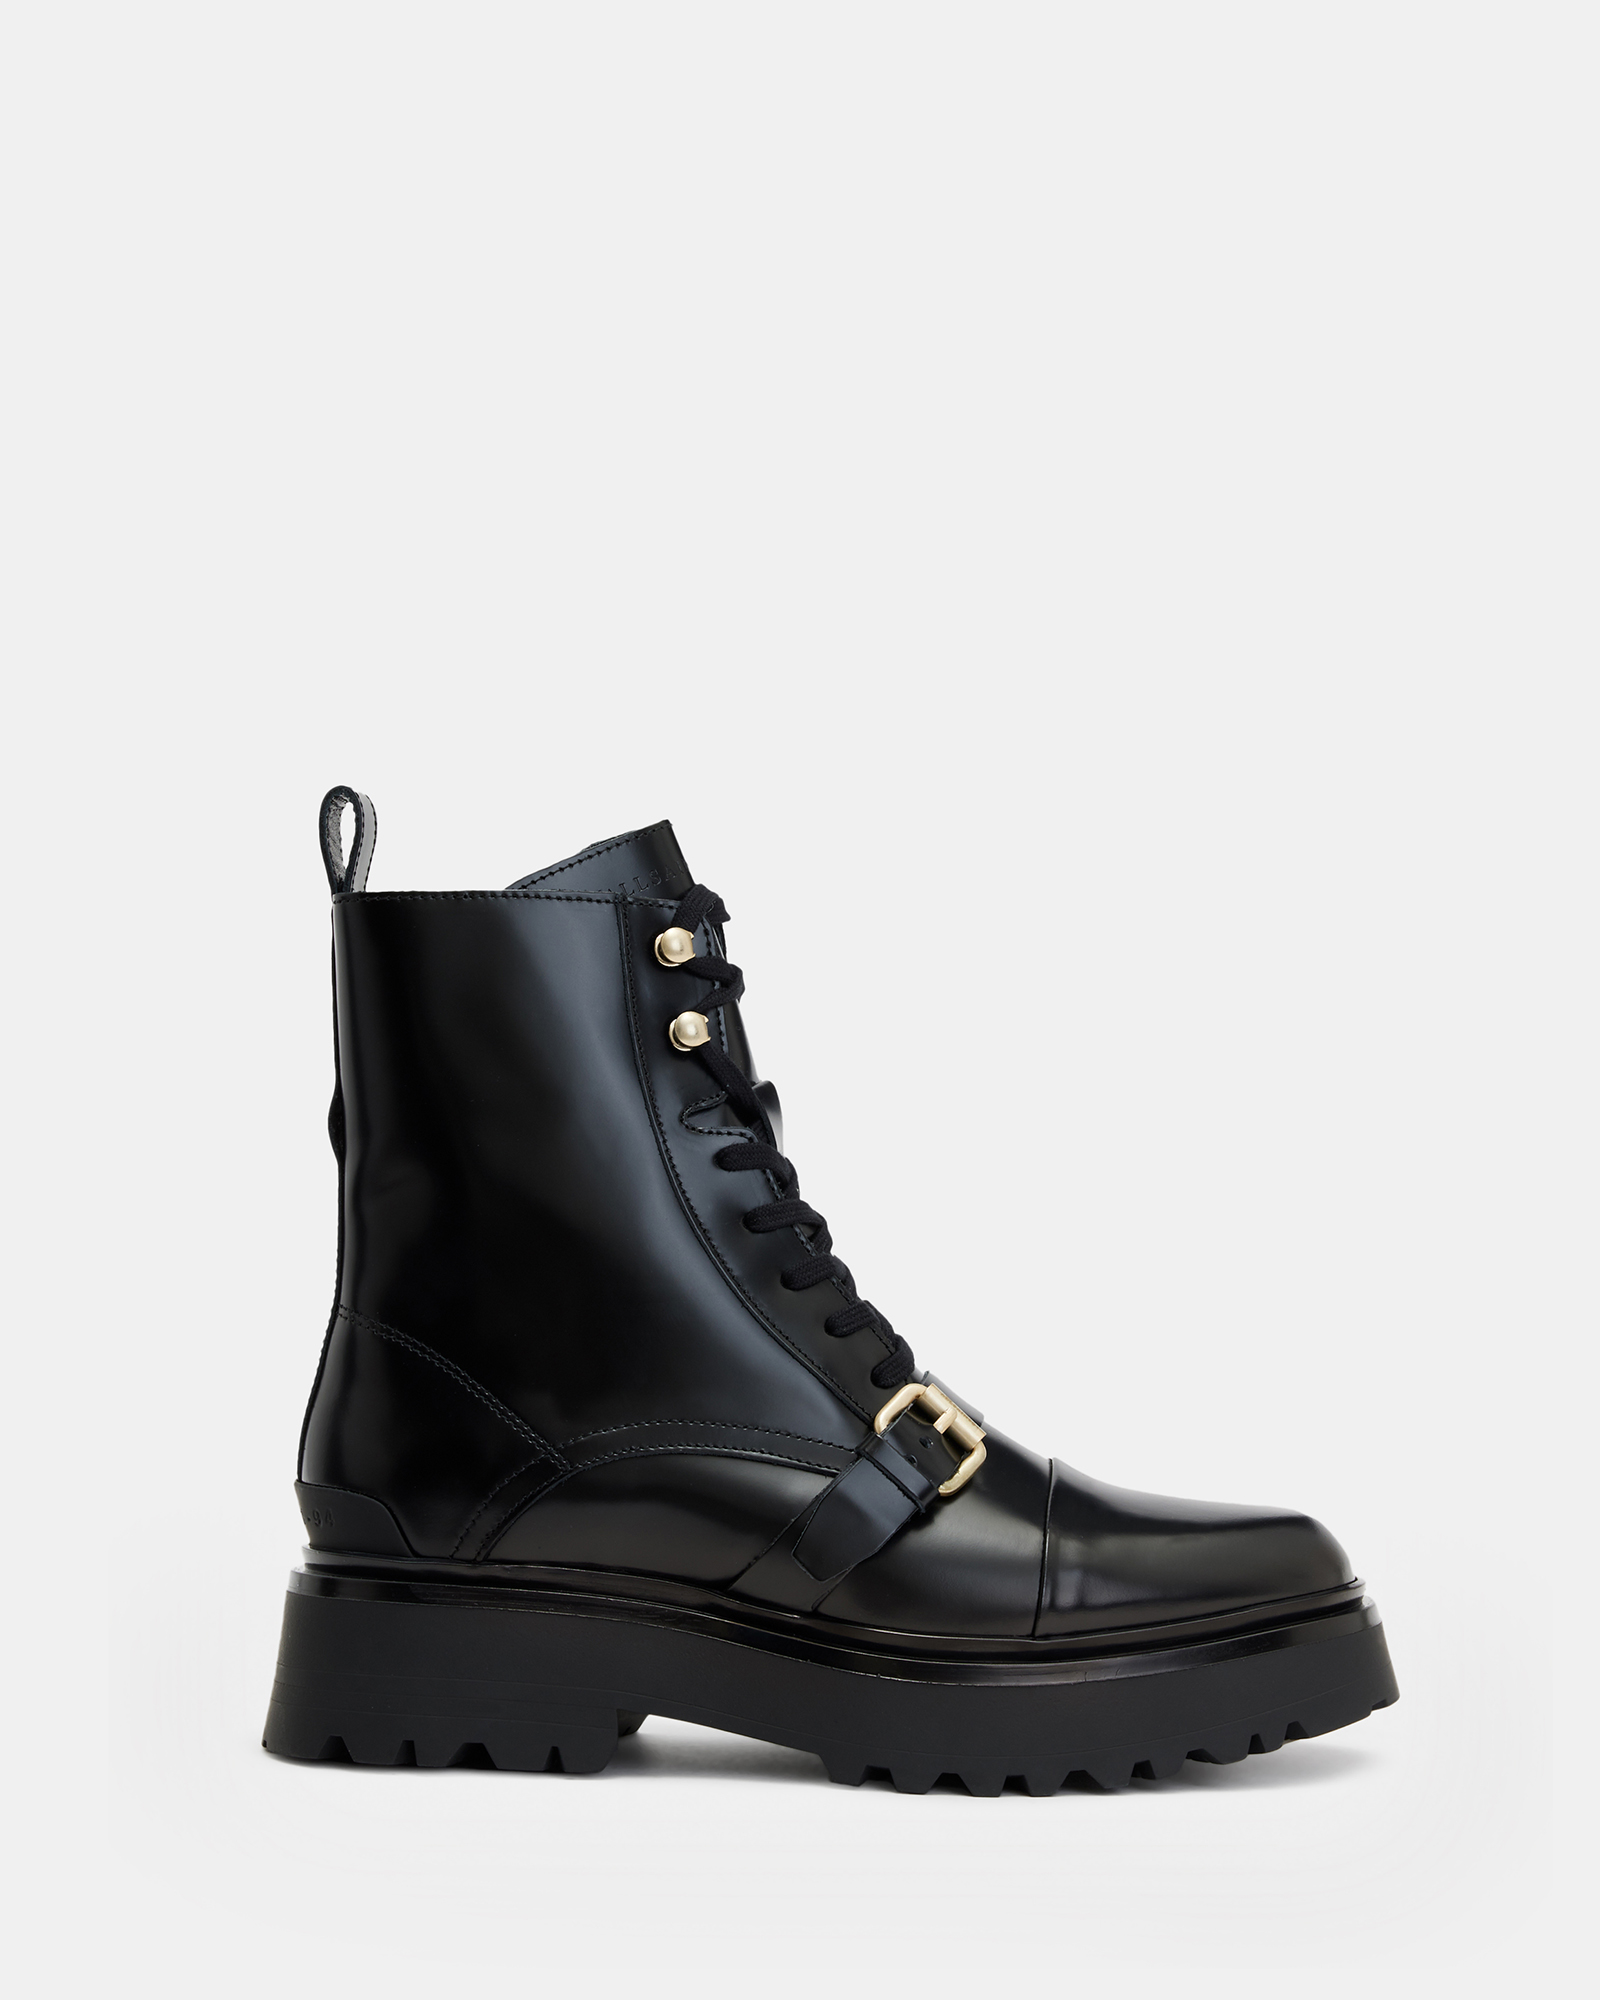 AllSaints Stellar Leather Boots,, Black, Size: UK